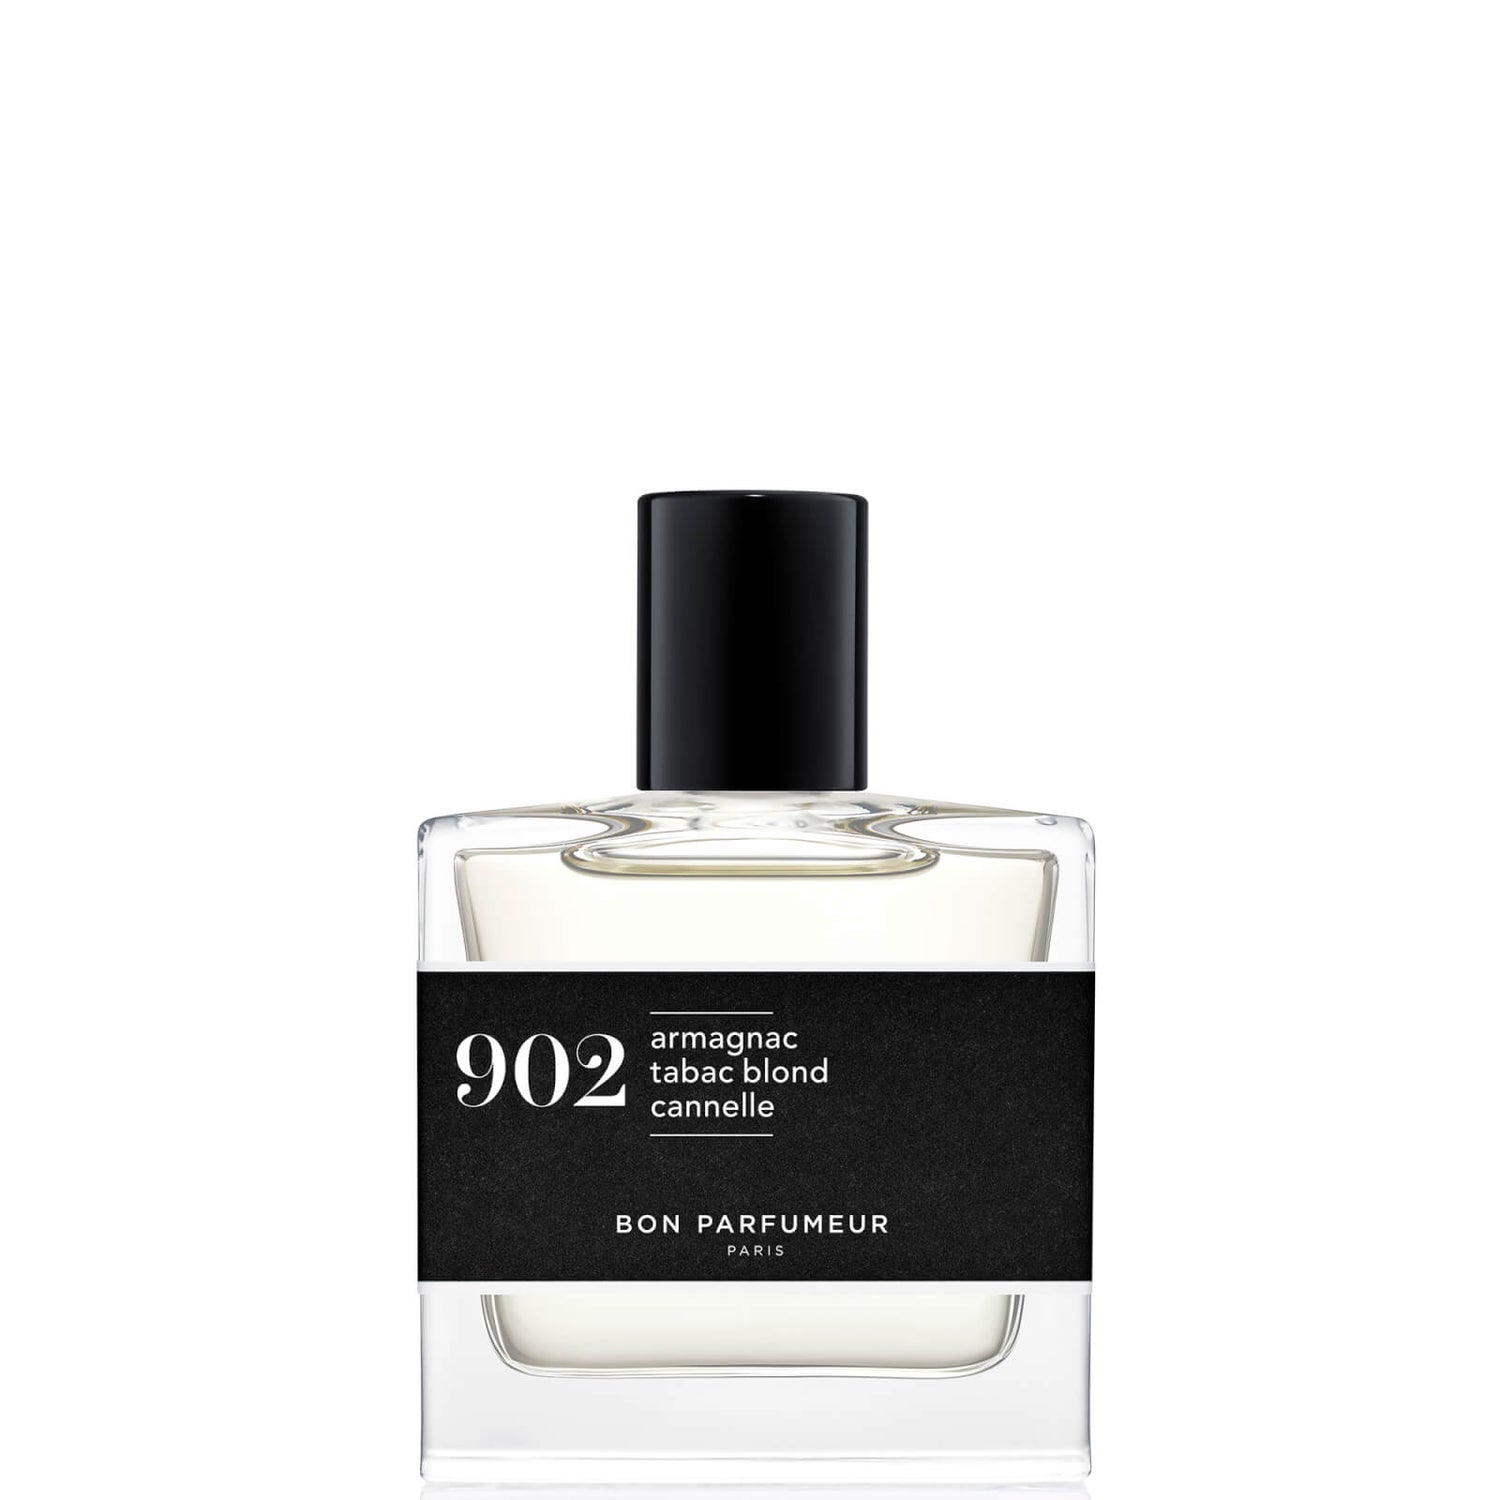 Bon Parfumeur 902 Armagnac Blond Tabak Kaneel Eau de Parfum - 30ml